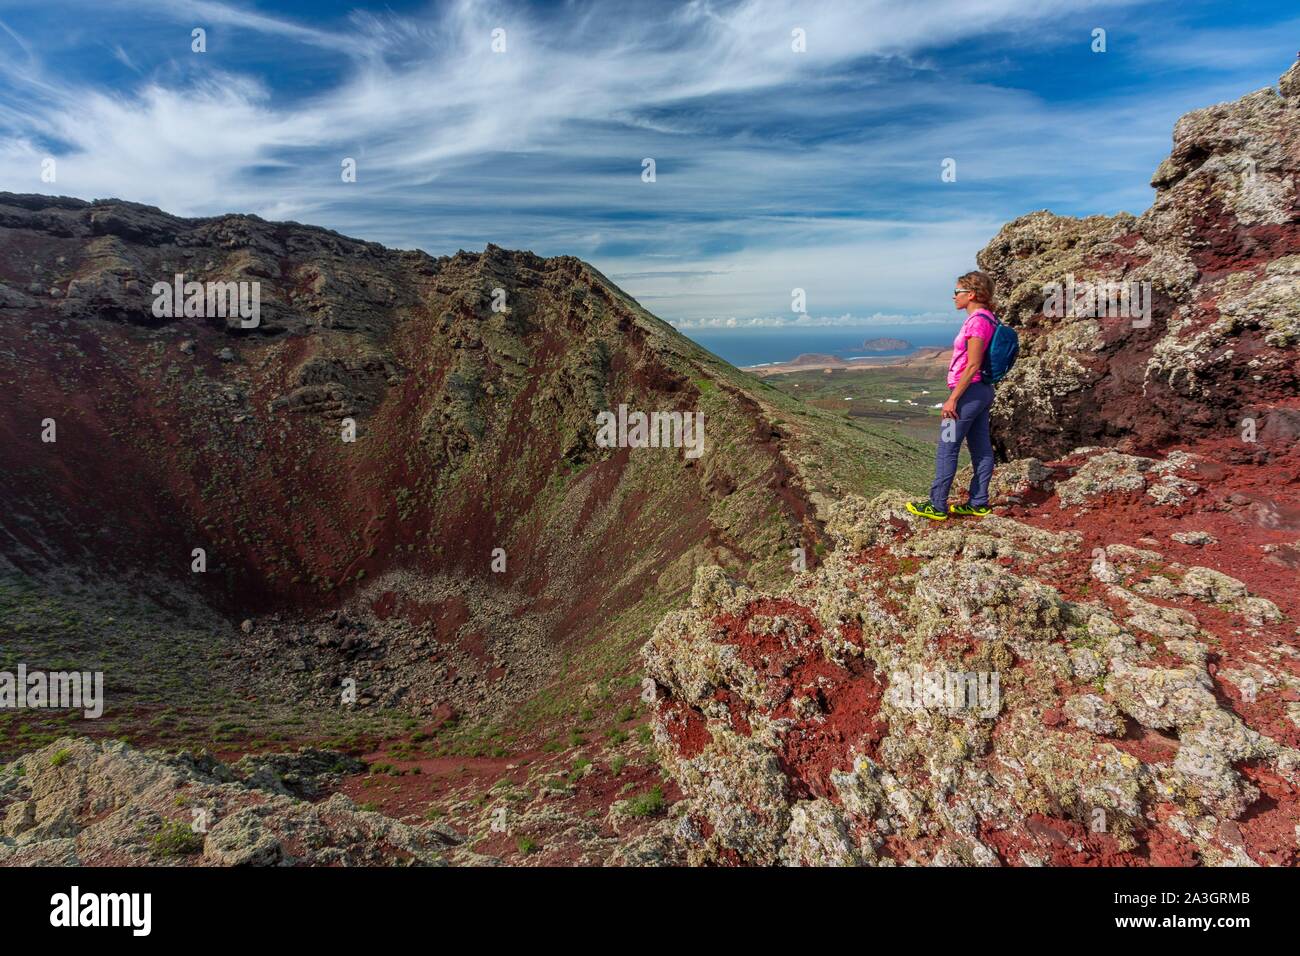 Spain, Canary Islands, Lanzarote Island, Biosphere Reserve, Monte Corona, woman practicing hiking Stock Photo